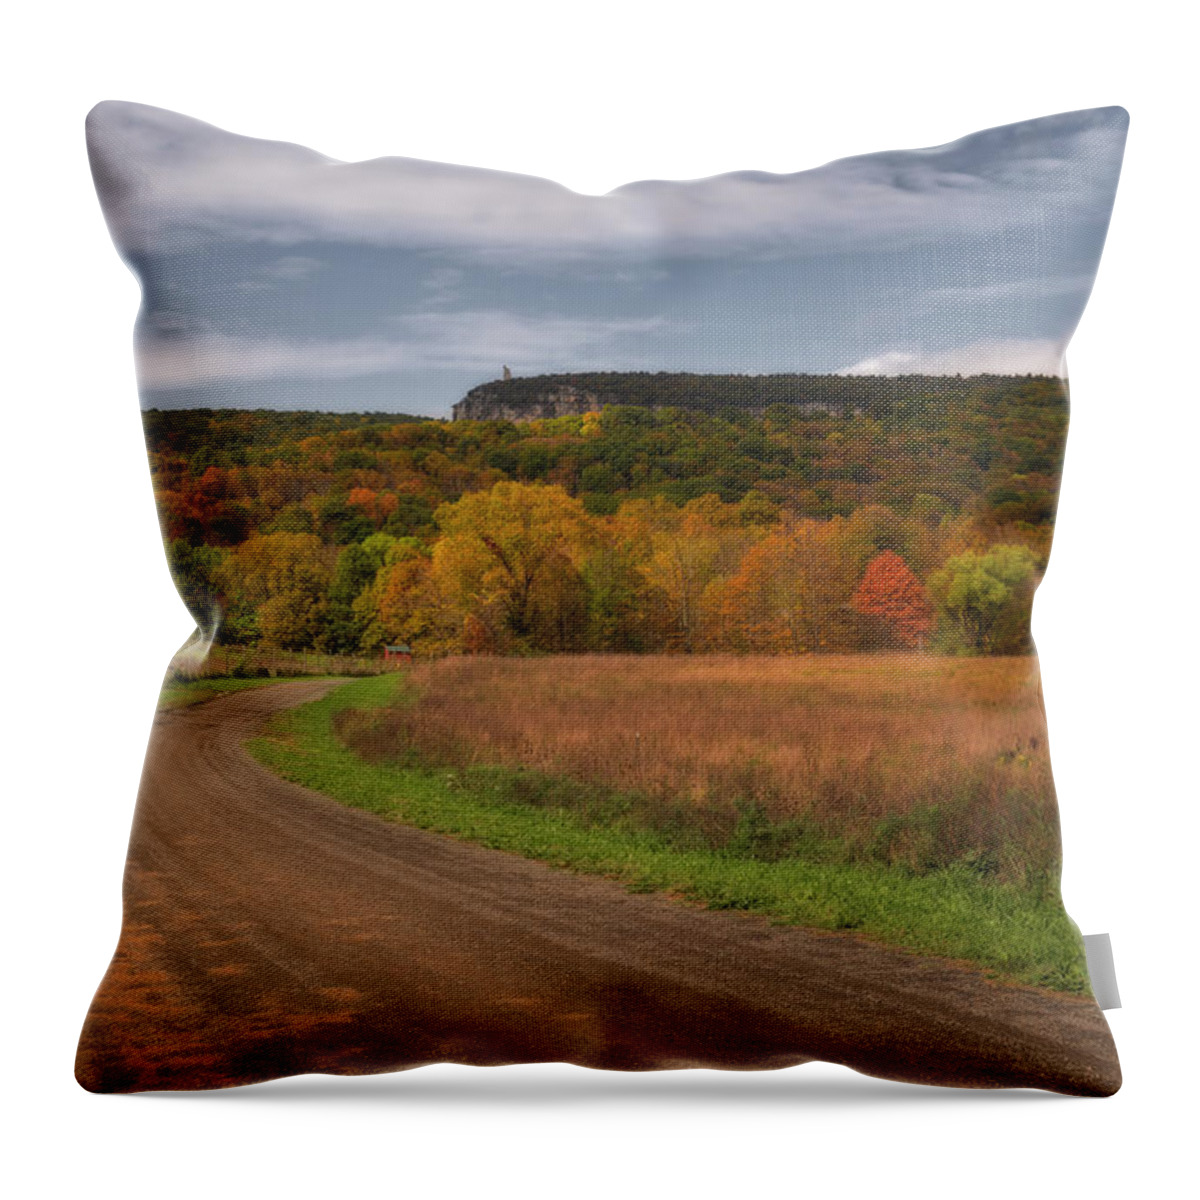 Shawangunk Throw Pillow featuring the photograph Shawangunk Mountain Hudson Valley NY by Susan Candelario